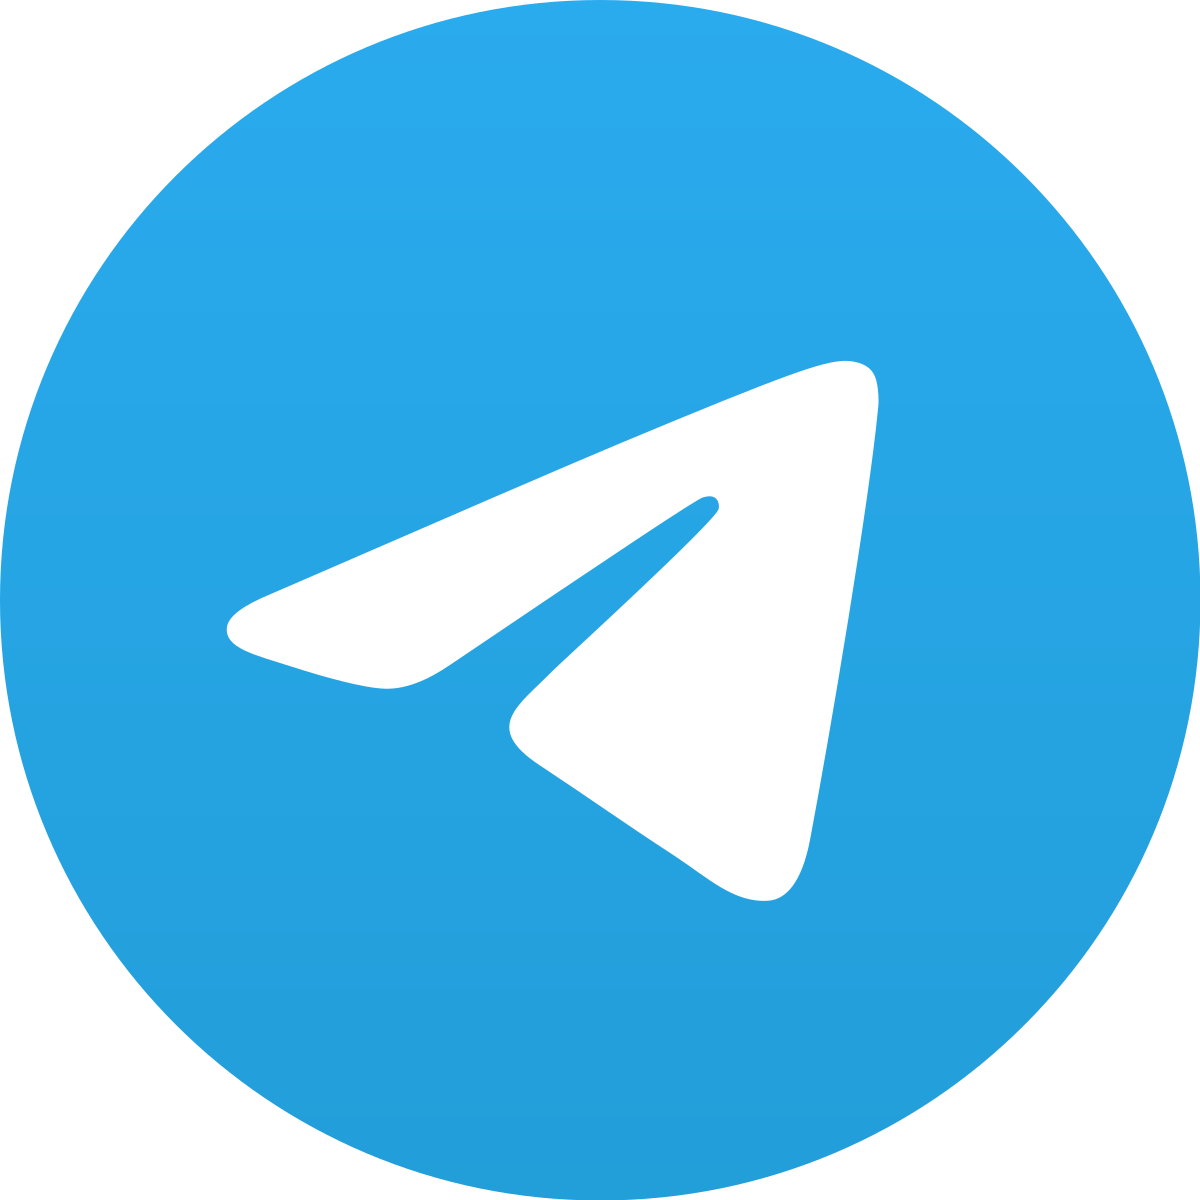 Buy Telegram Members: Top 5 Best Sites Where You Can Buy Telegram Members